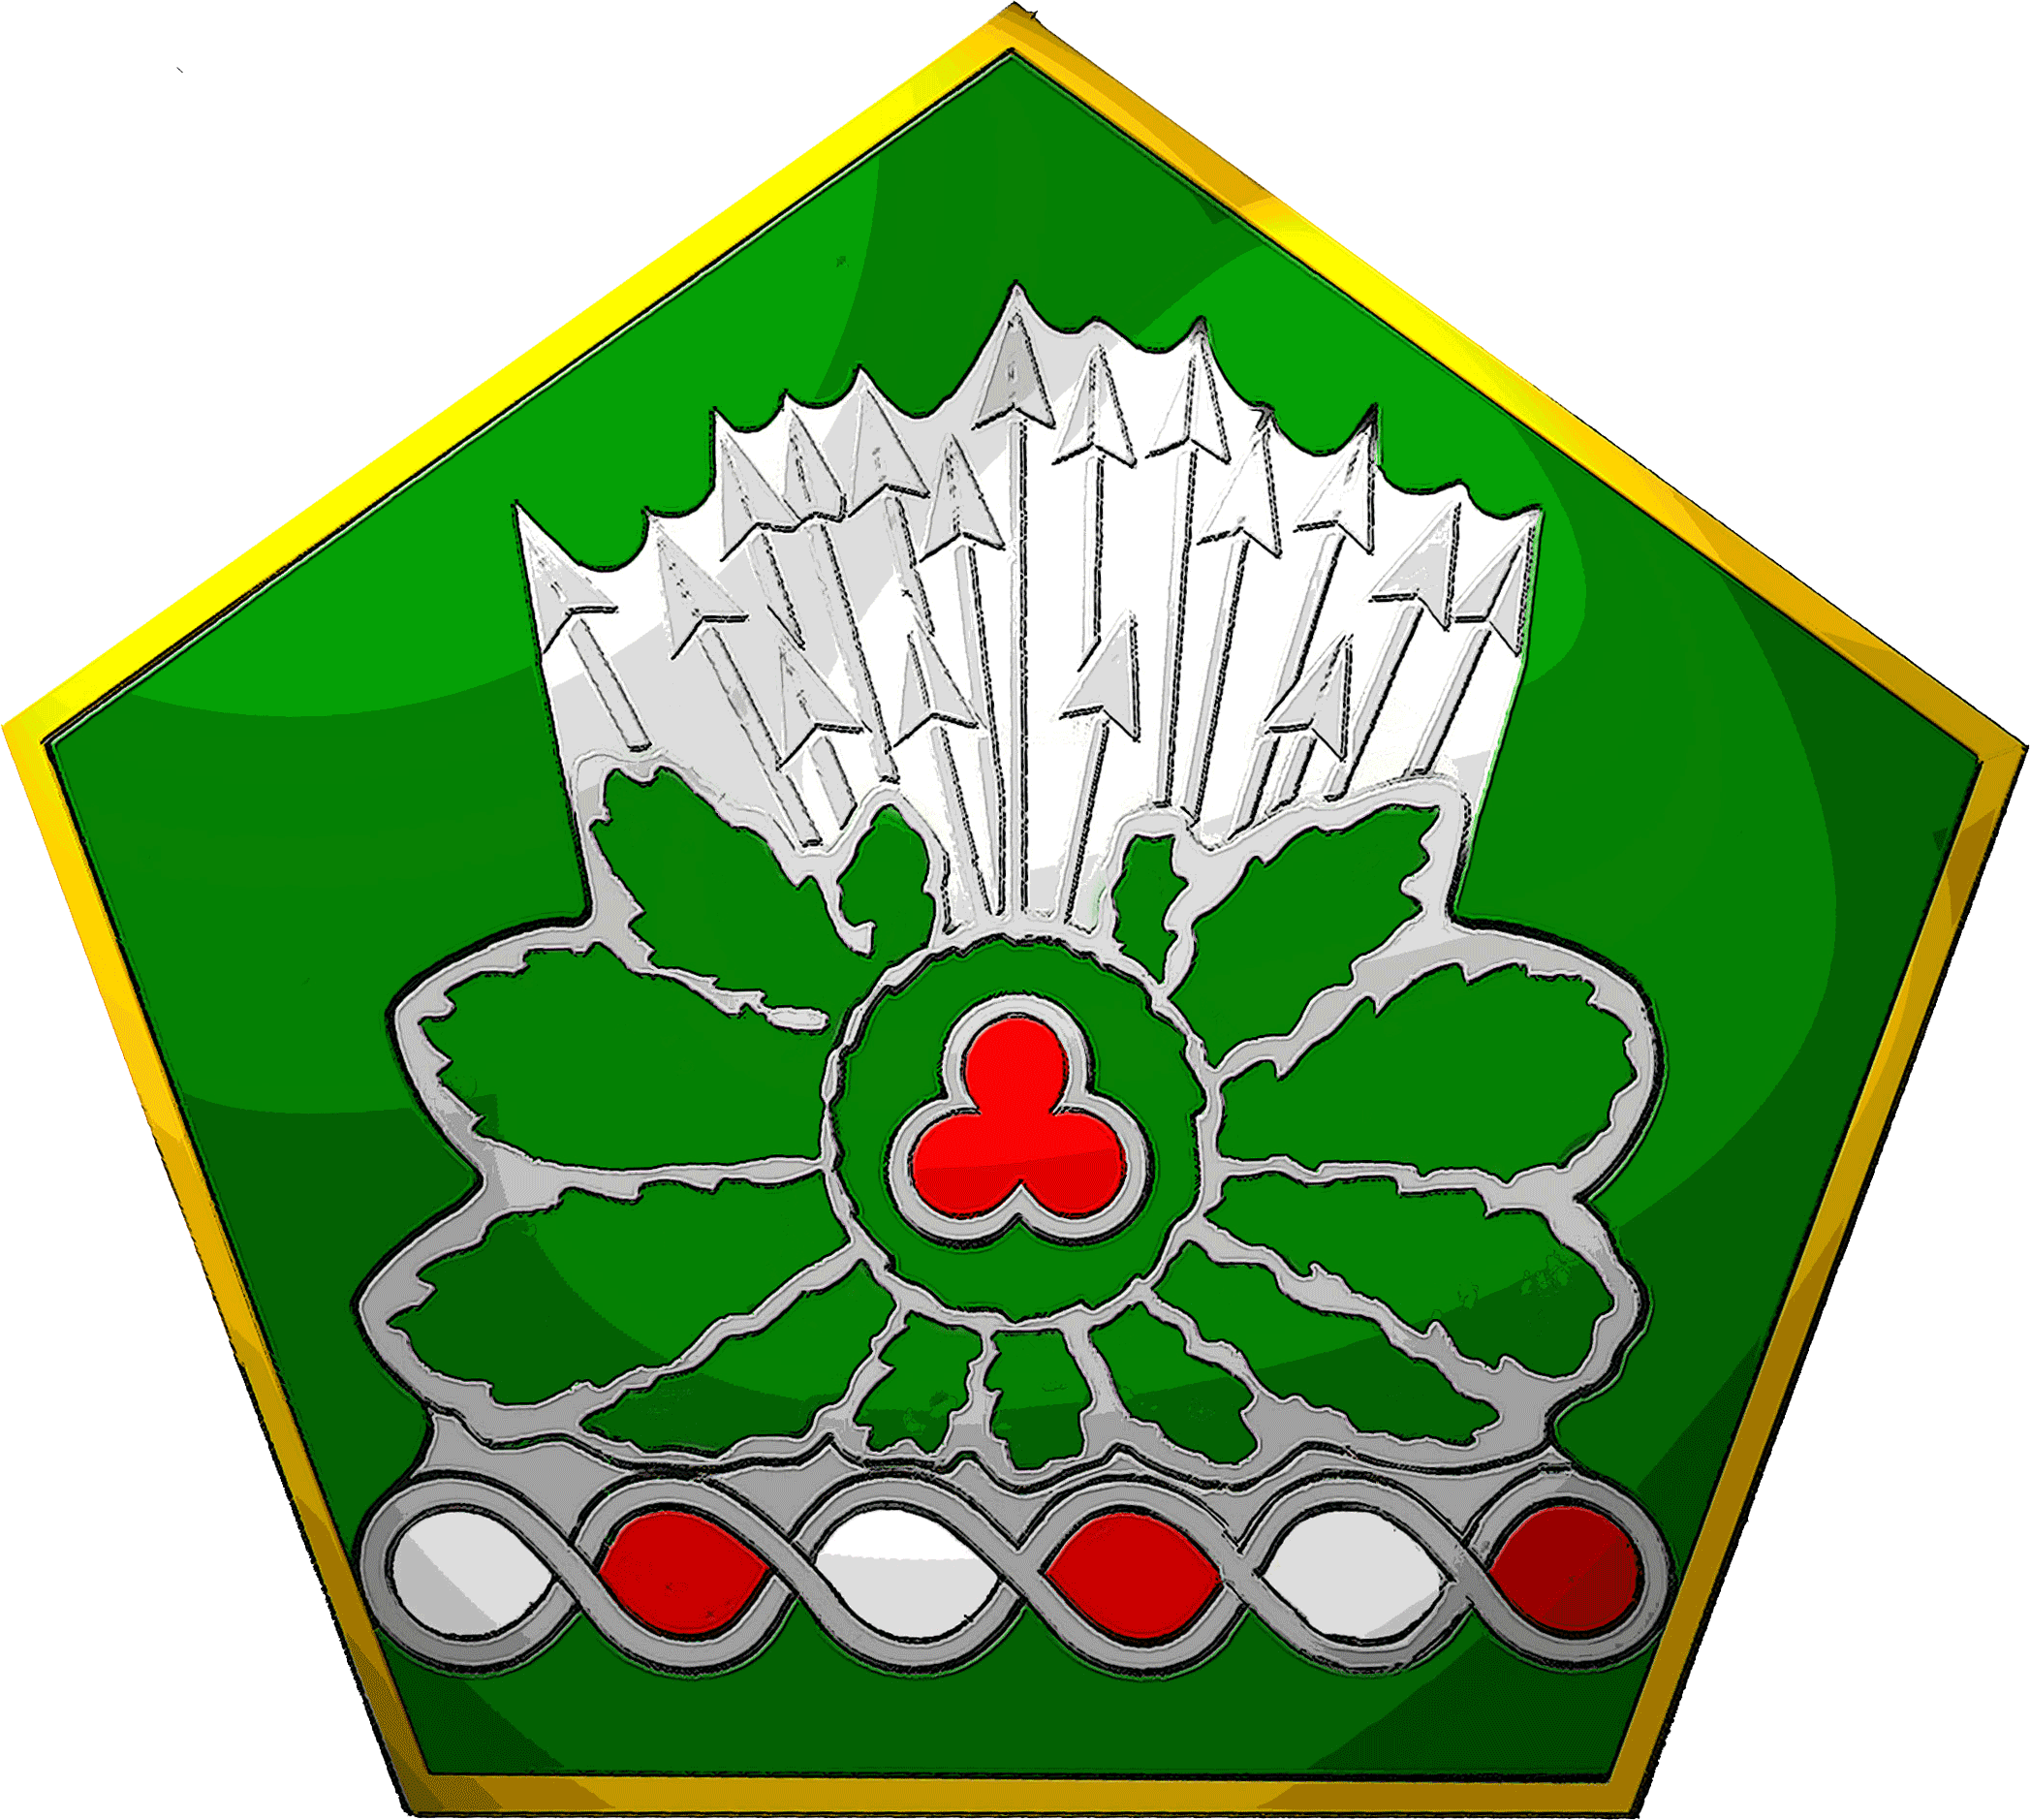 Ohio Army National Guard Medical Detachment distinctive unit insignia